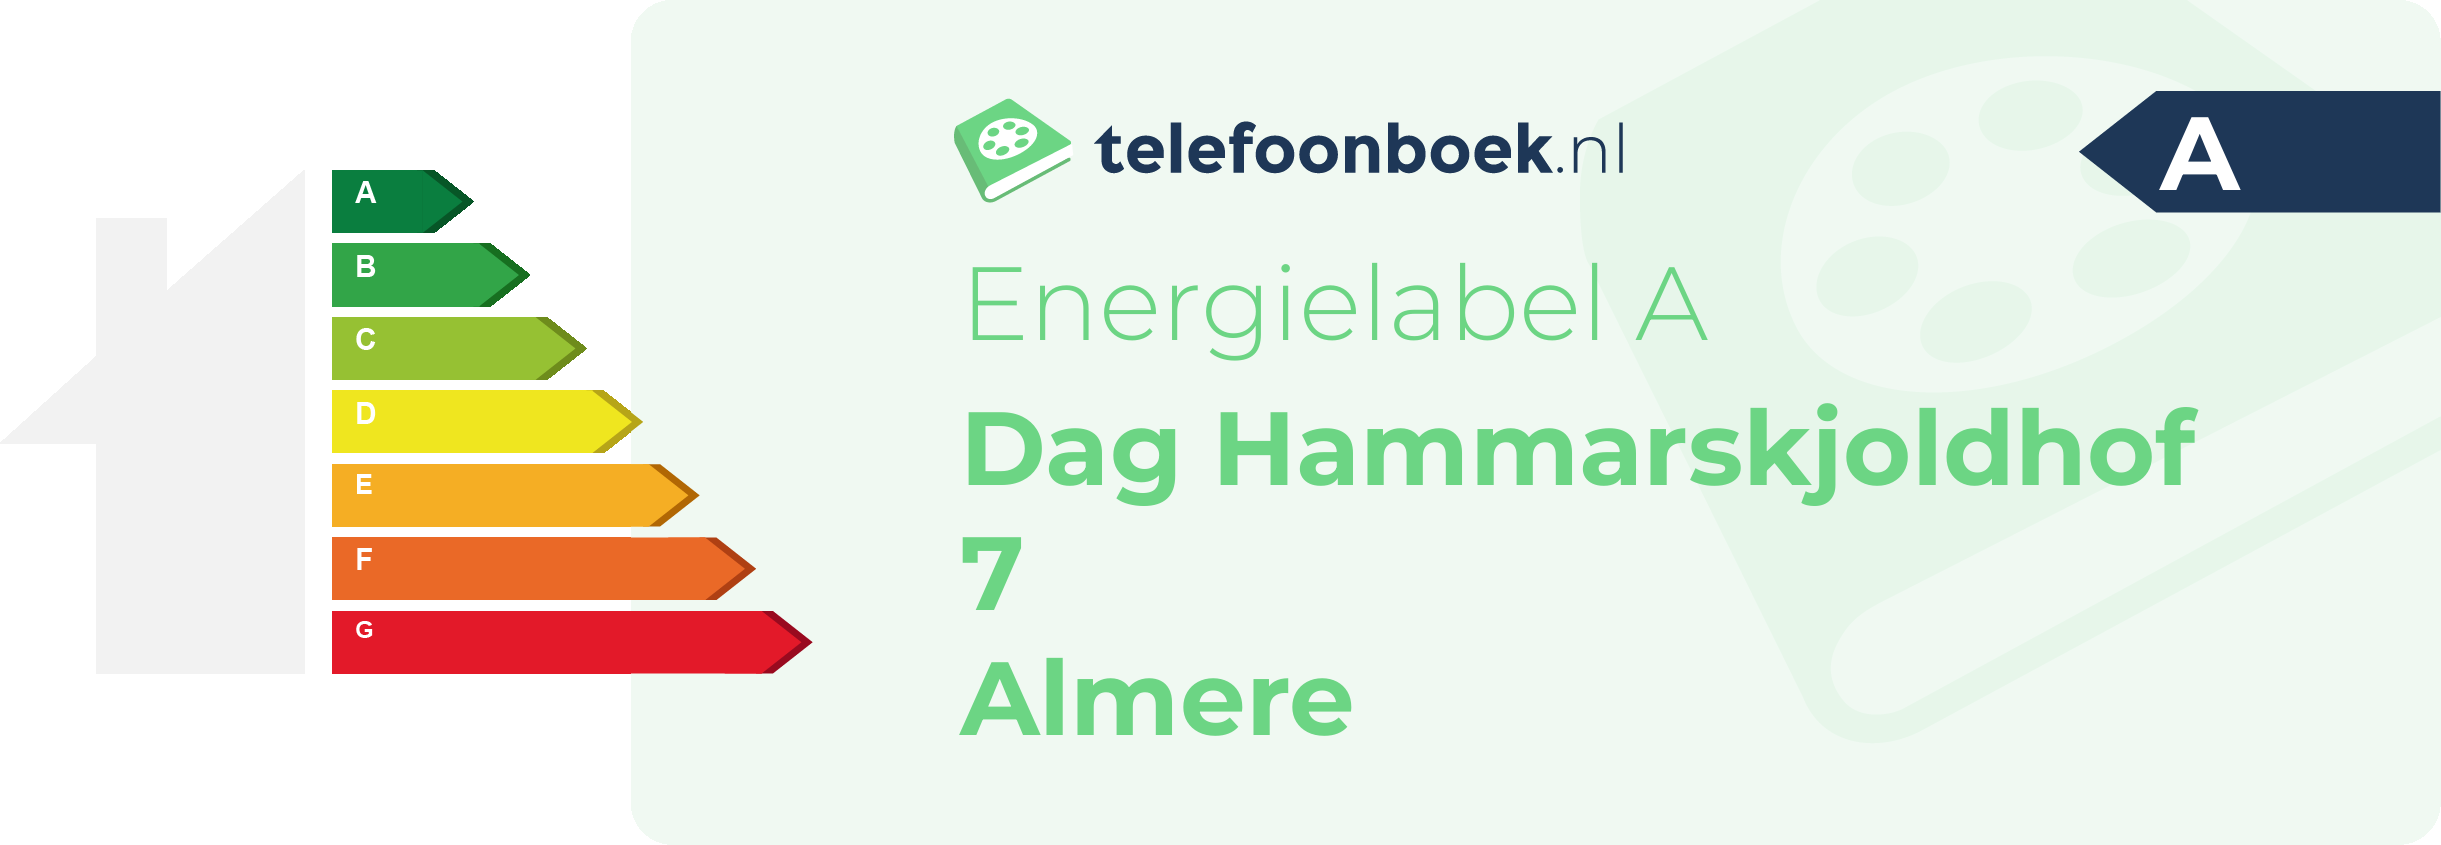 Energielabel Dag Hammarskjoldhof 7 Almere